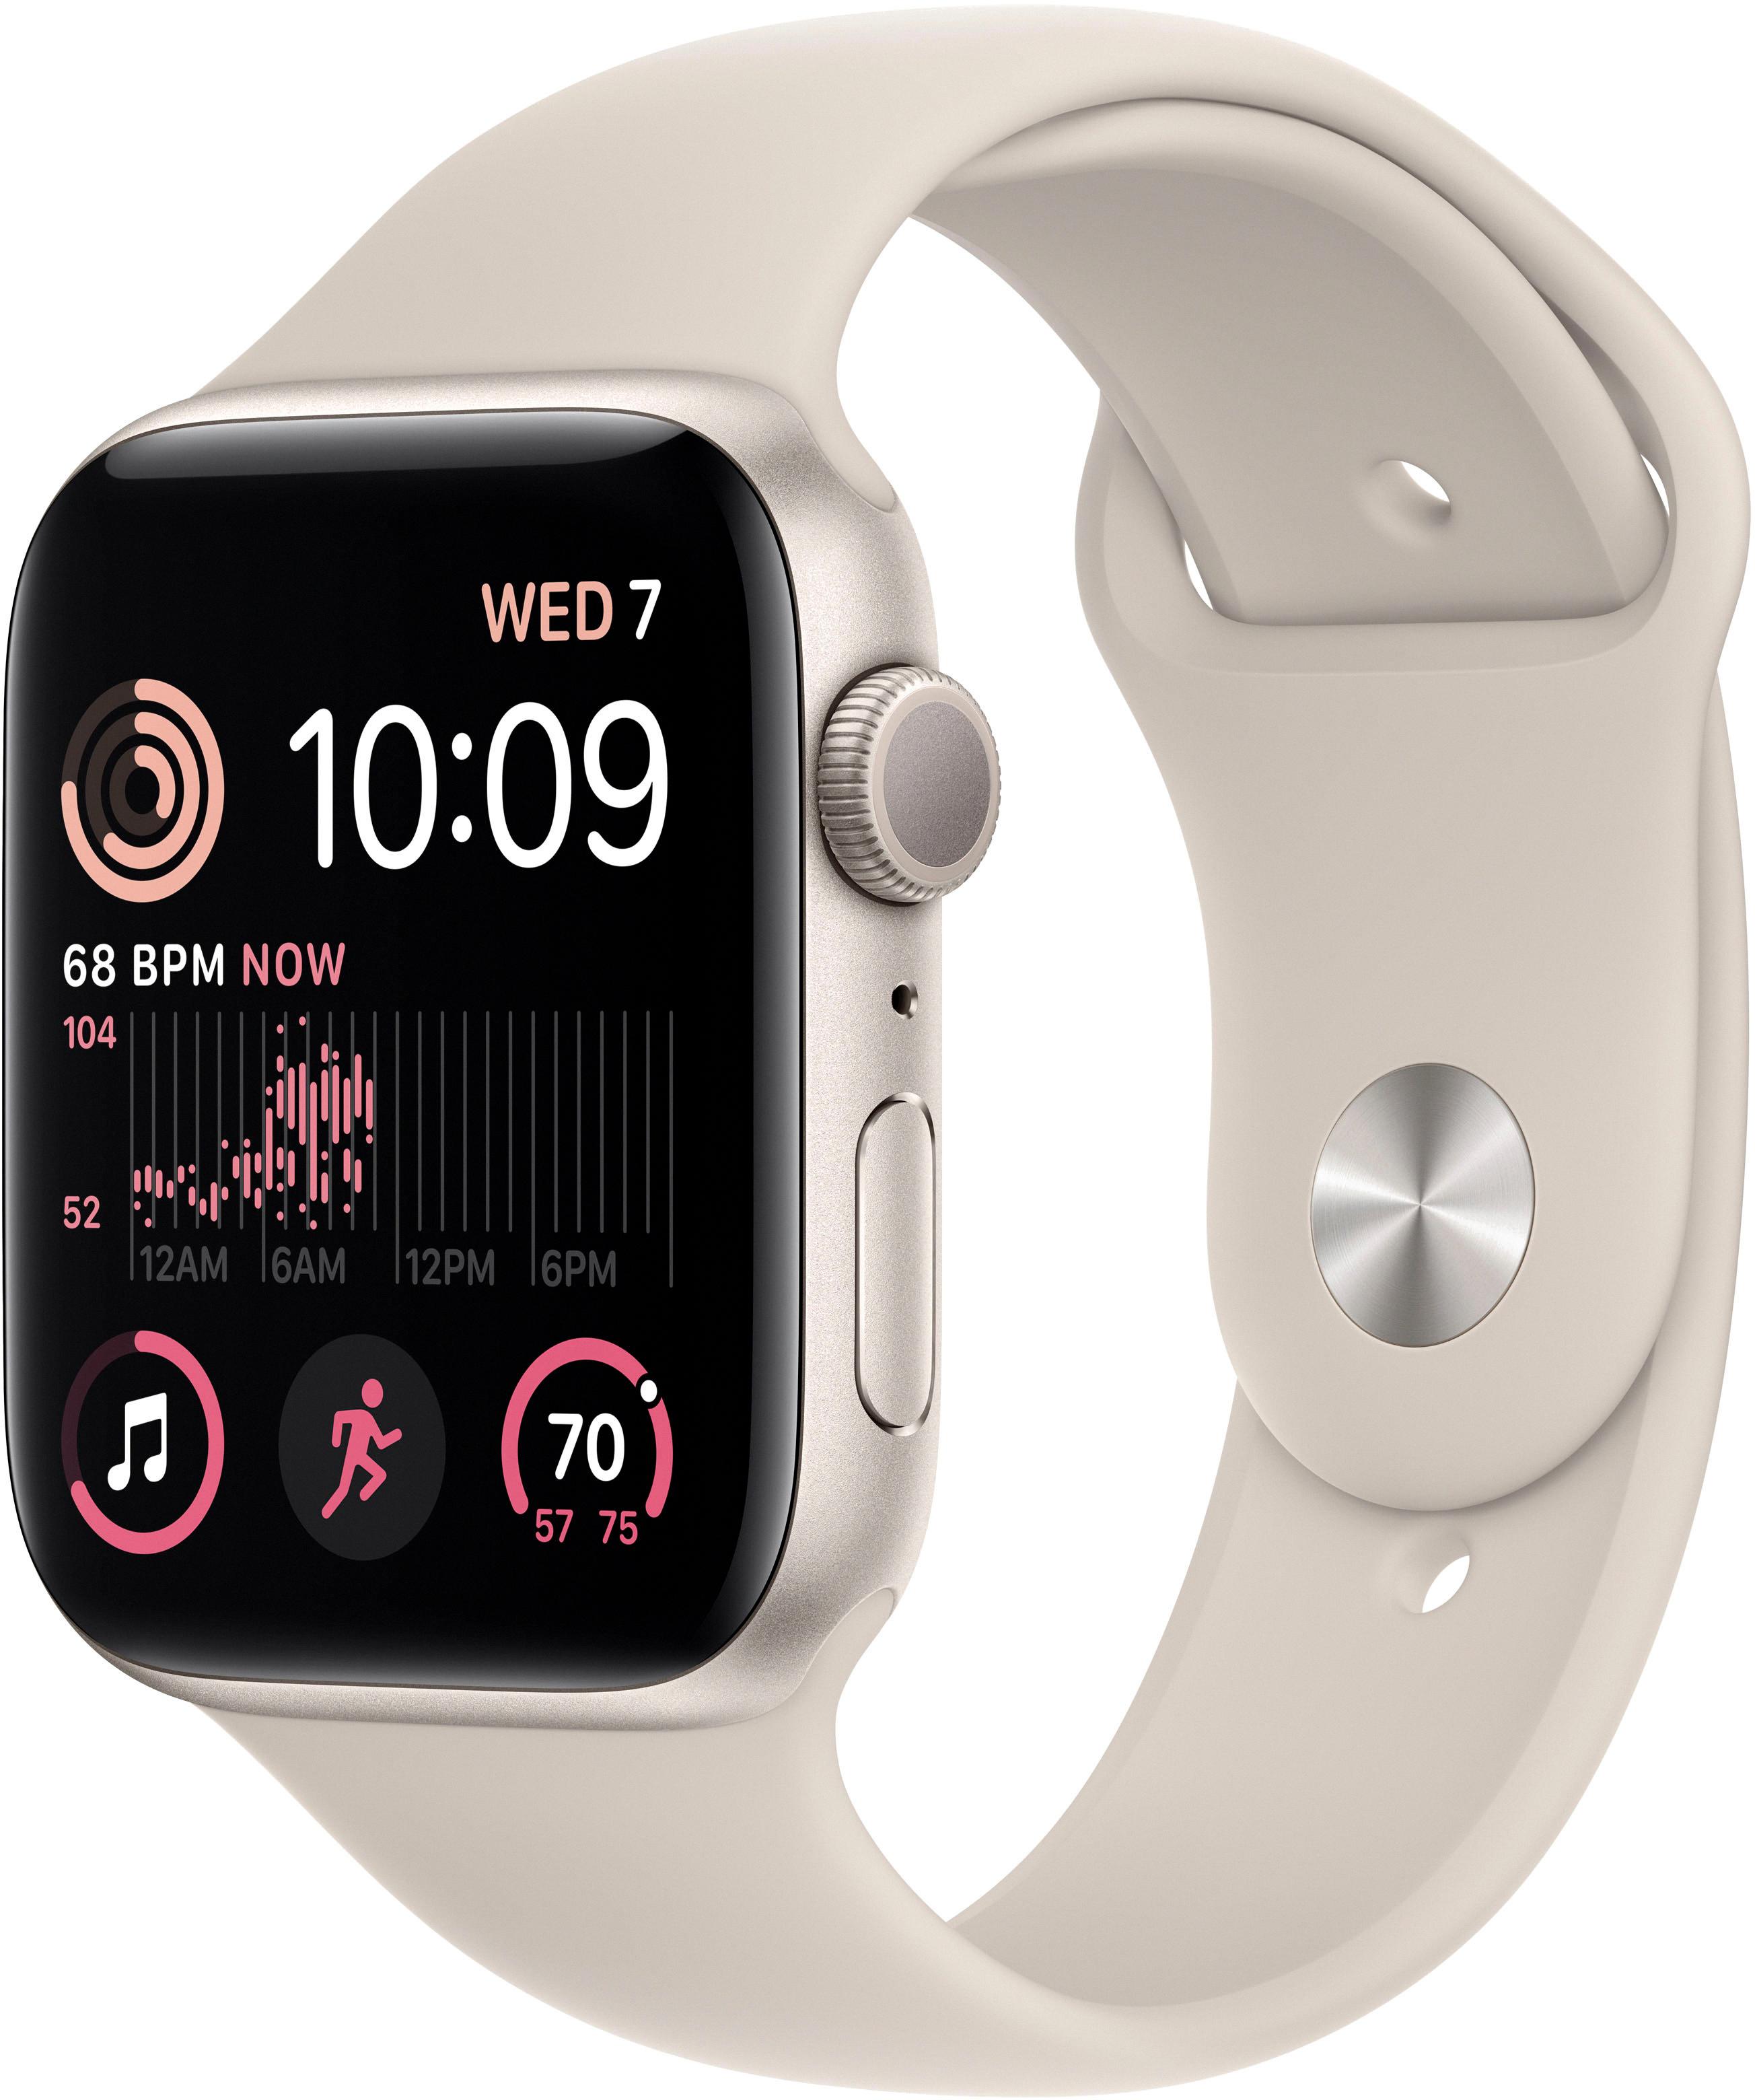 Apple Watch's Weekly Summary Notifications 1